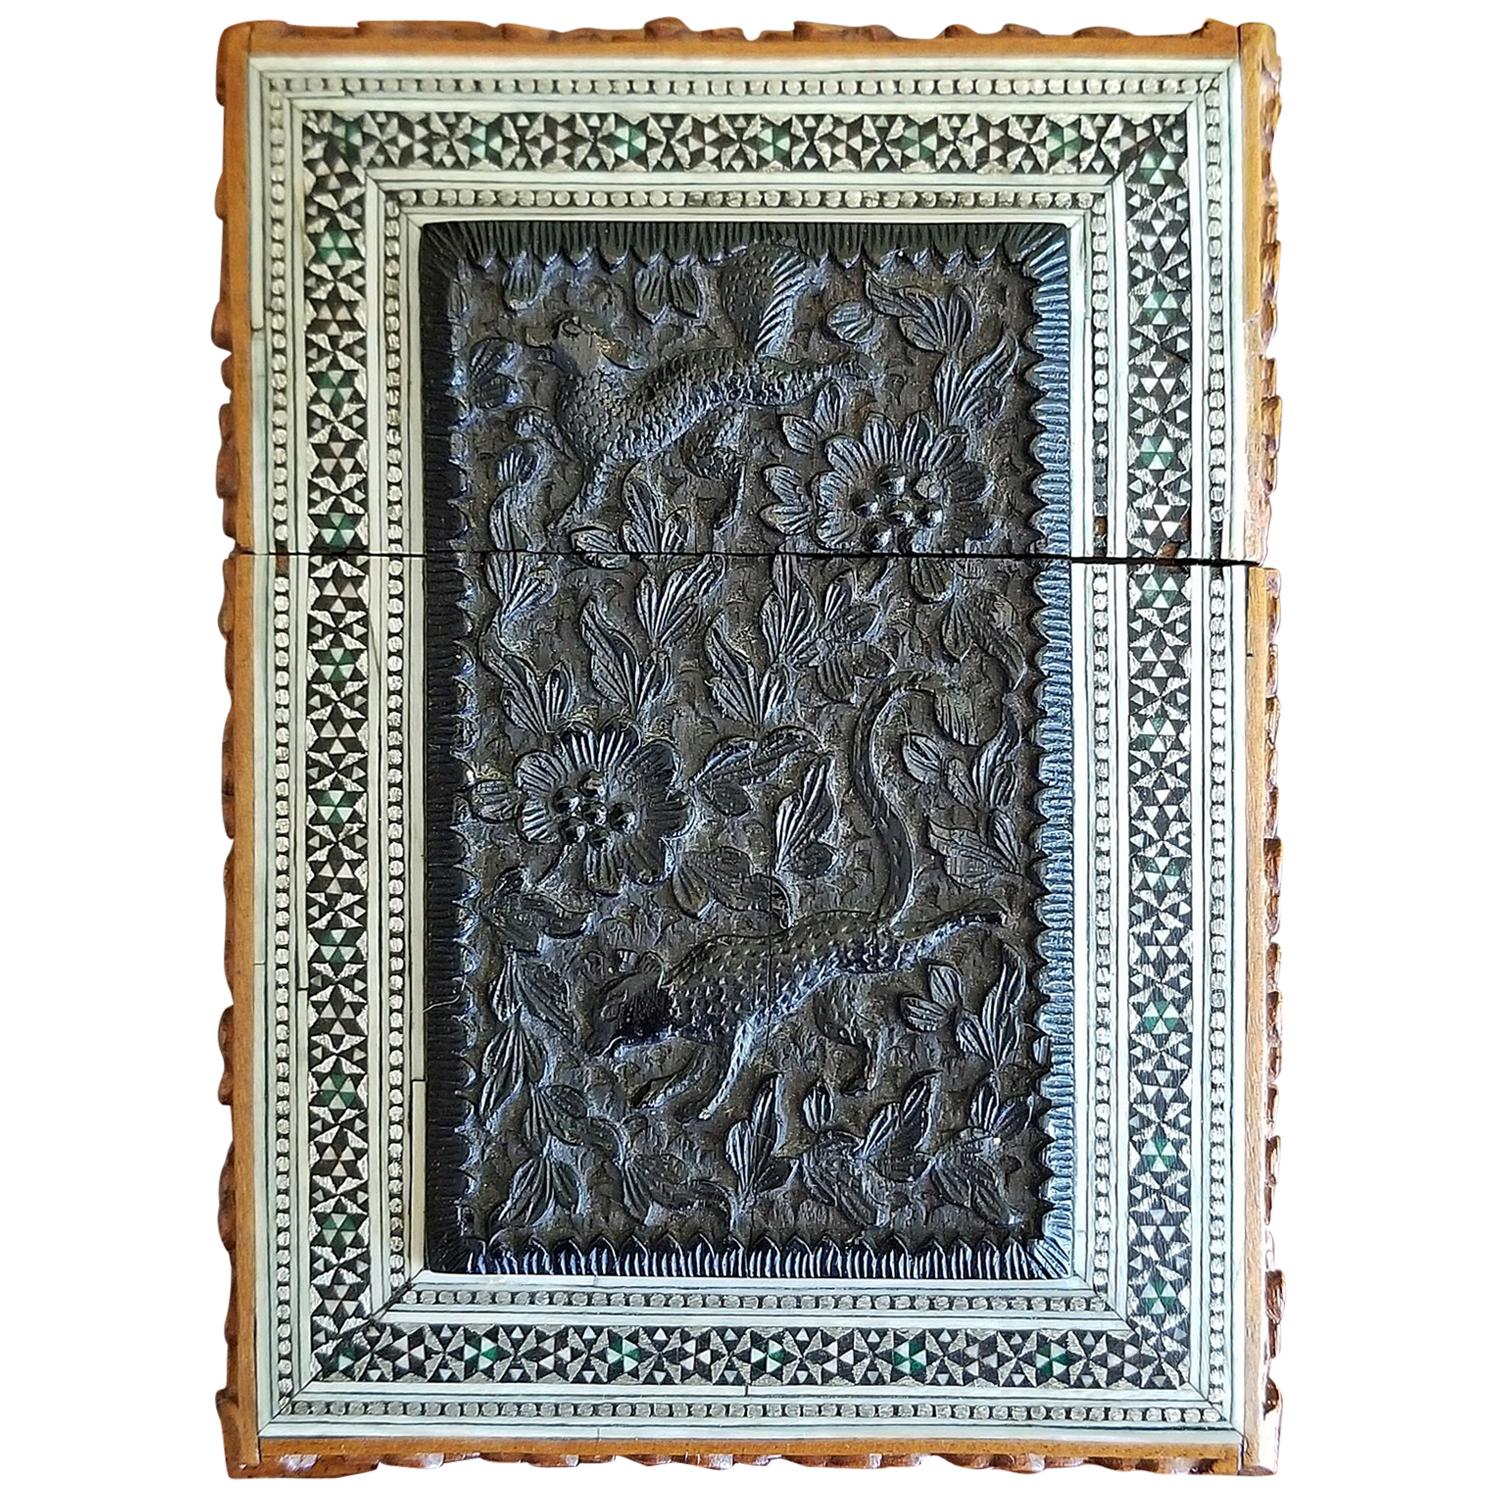 19th Century Anglo-Indian Sadeli Mosaic Calling Card Case